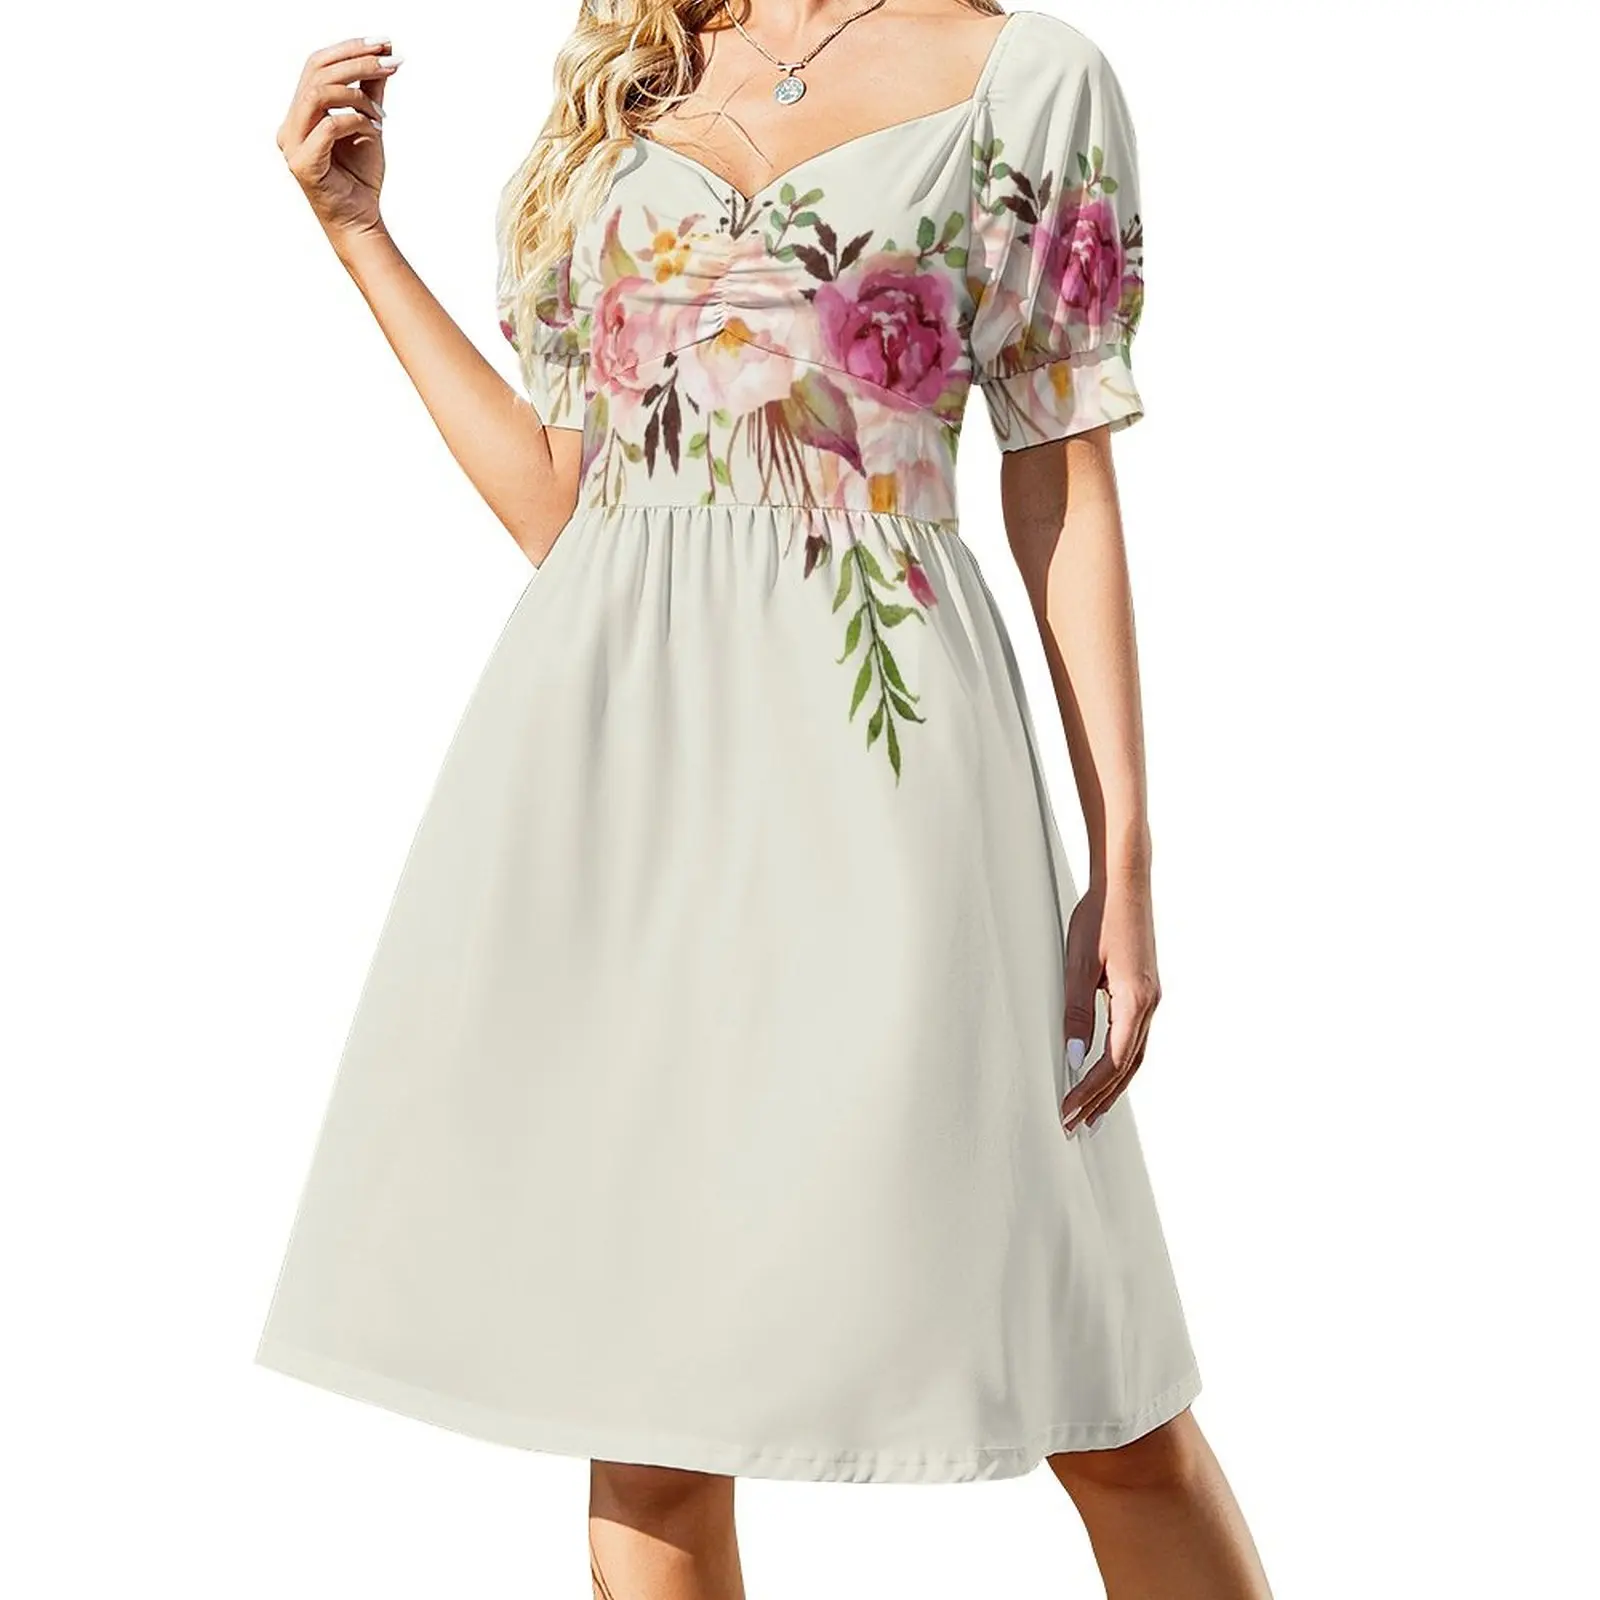 

Romantic Watercolor Flower Bouquet Sleeveless Dress Long veiled dresses dresses for special events beach dresses